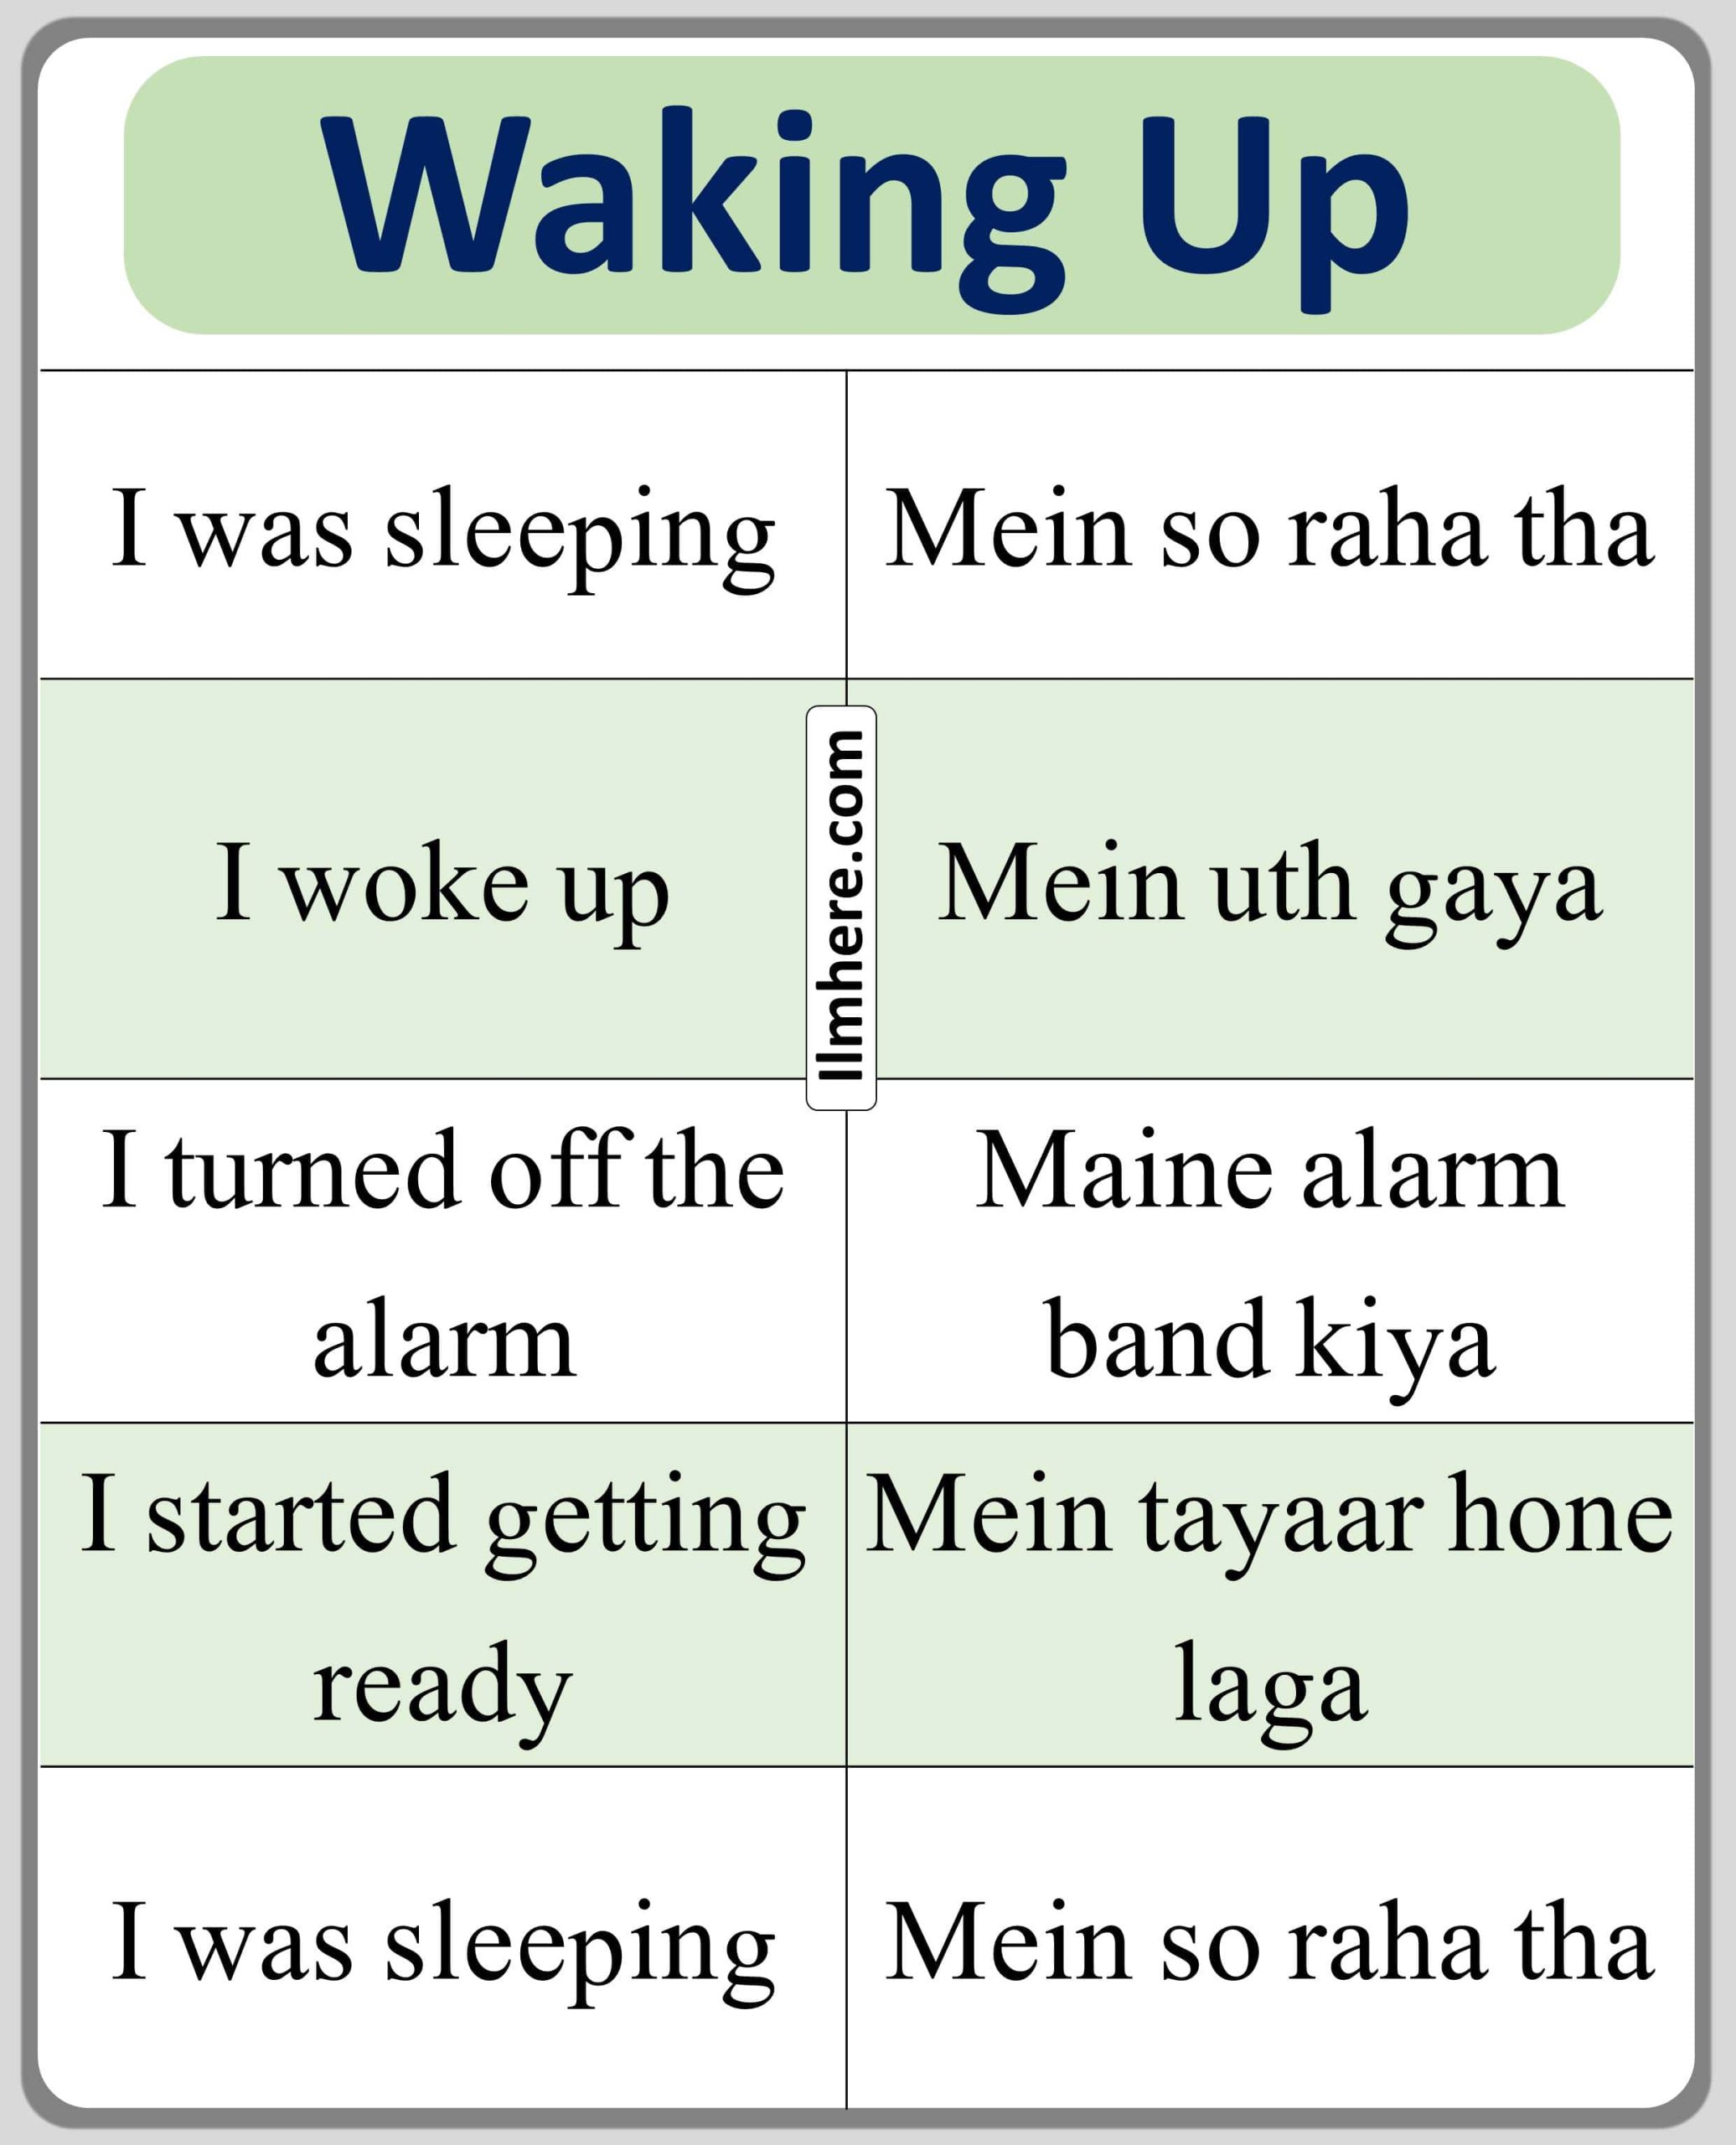 Waking Up Urdu to English Sentences for Household Chore